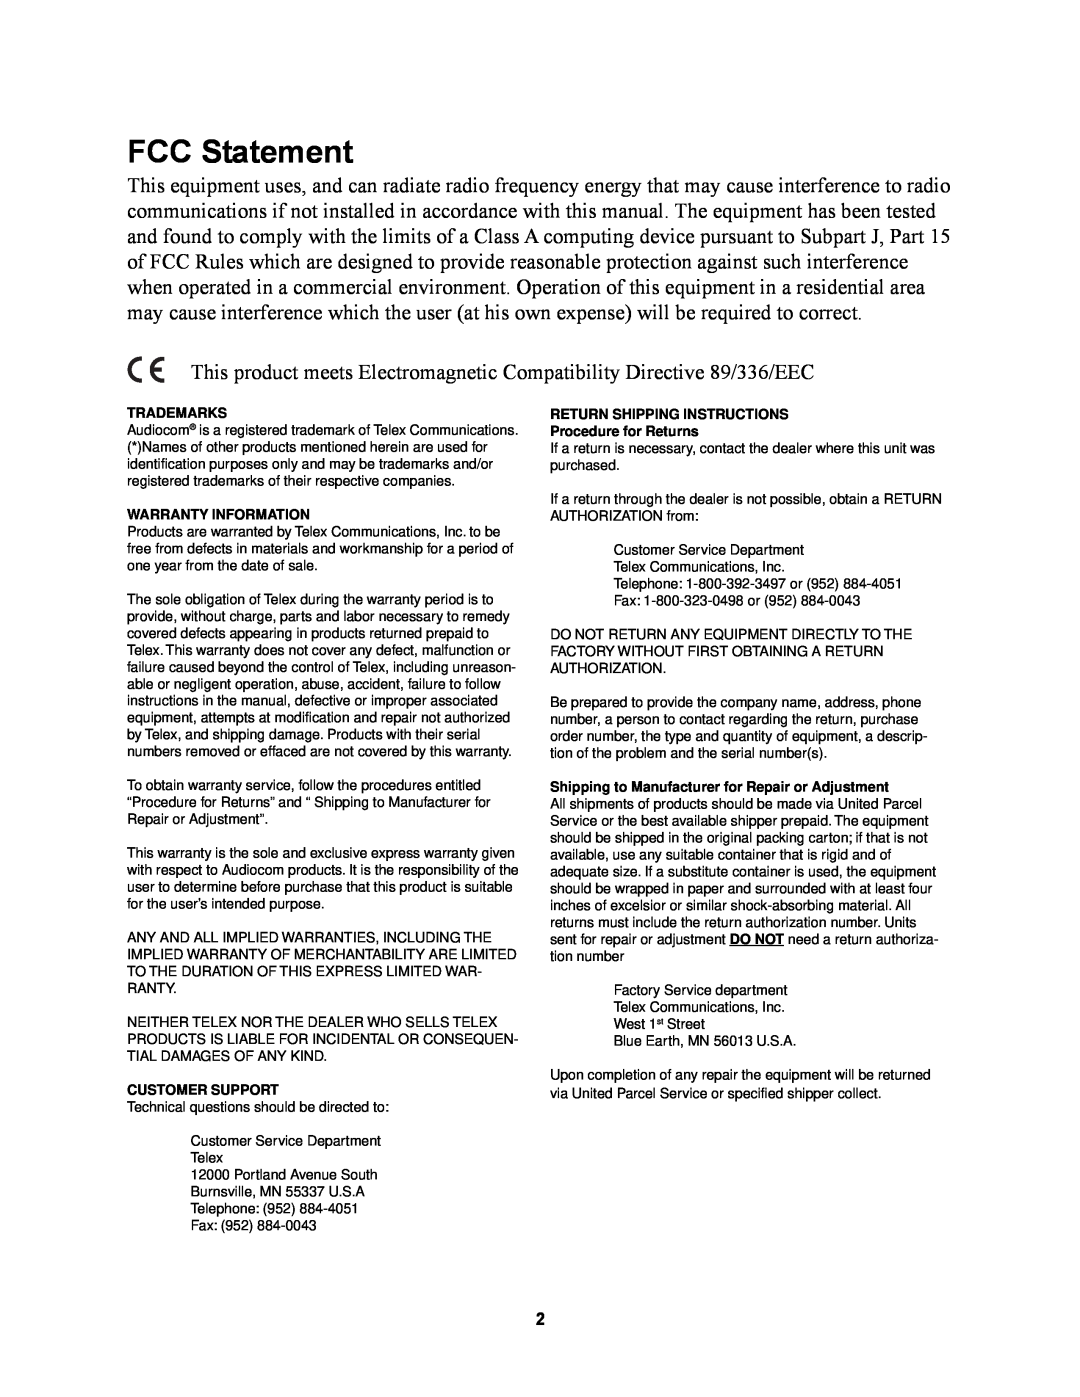 Telex MS2002 manual FCC Statement, Trademarks, Warranty Information, Customer Support 